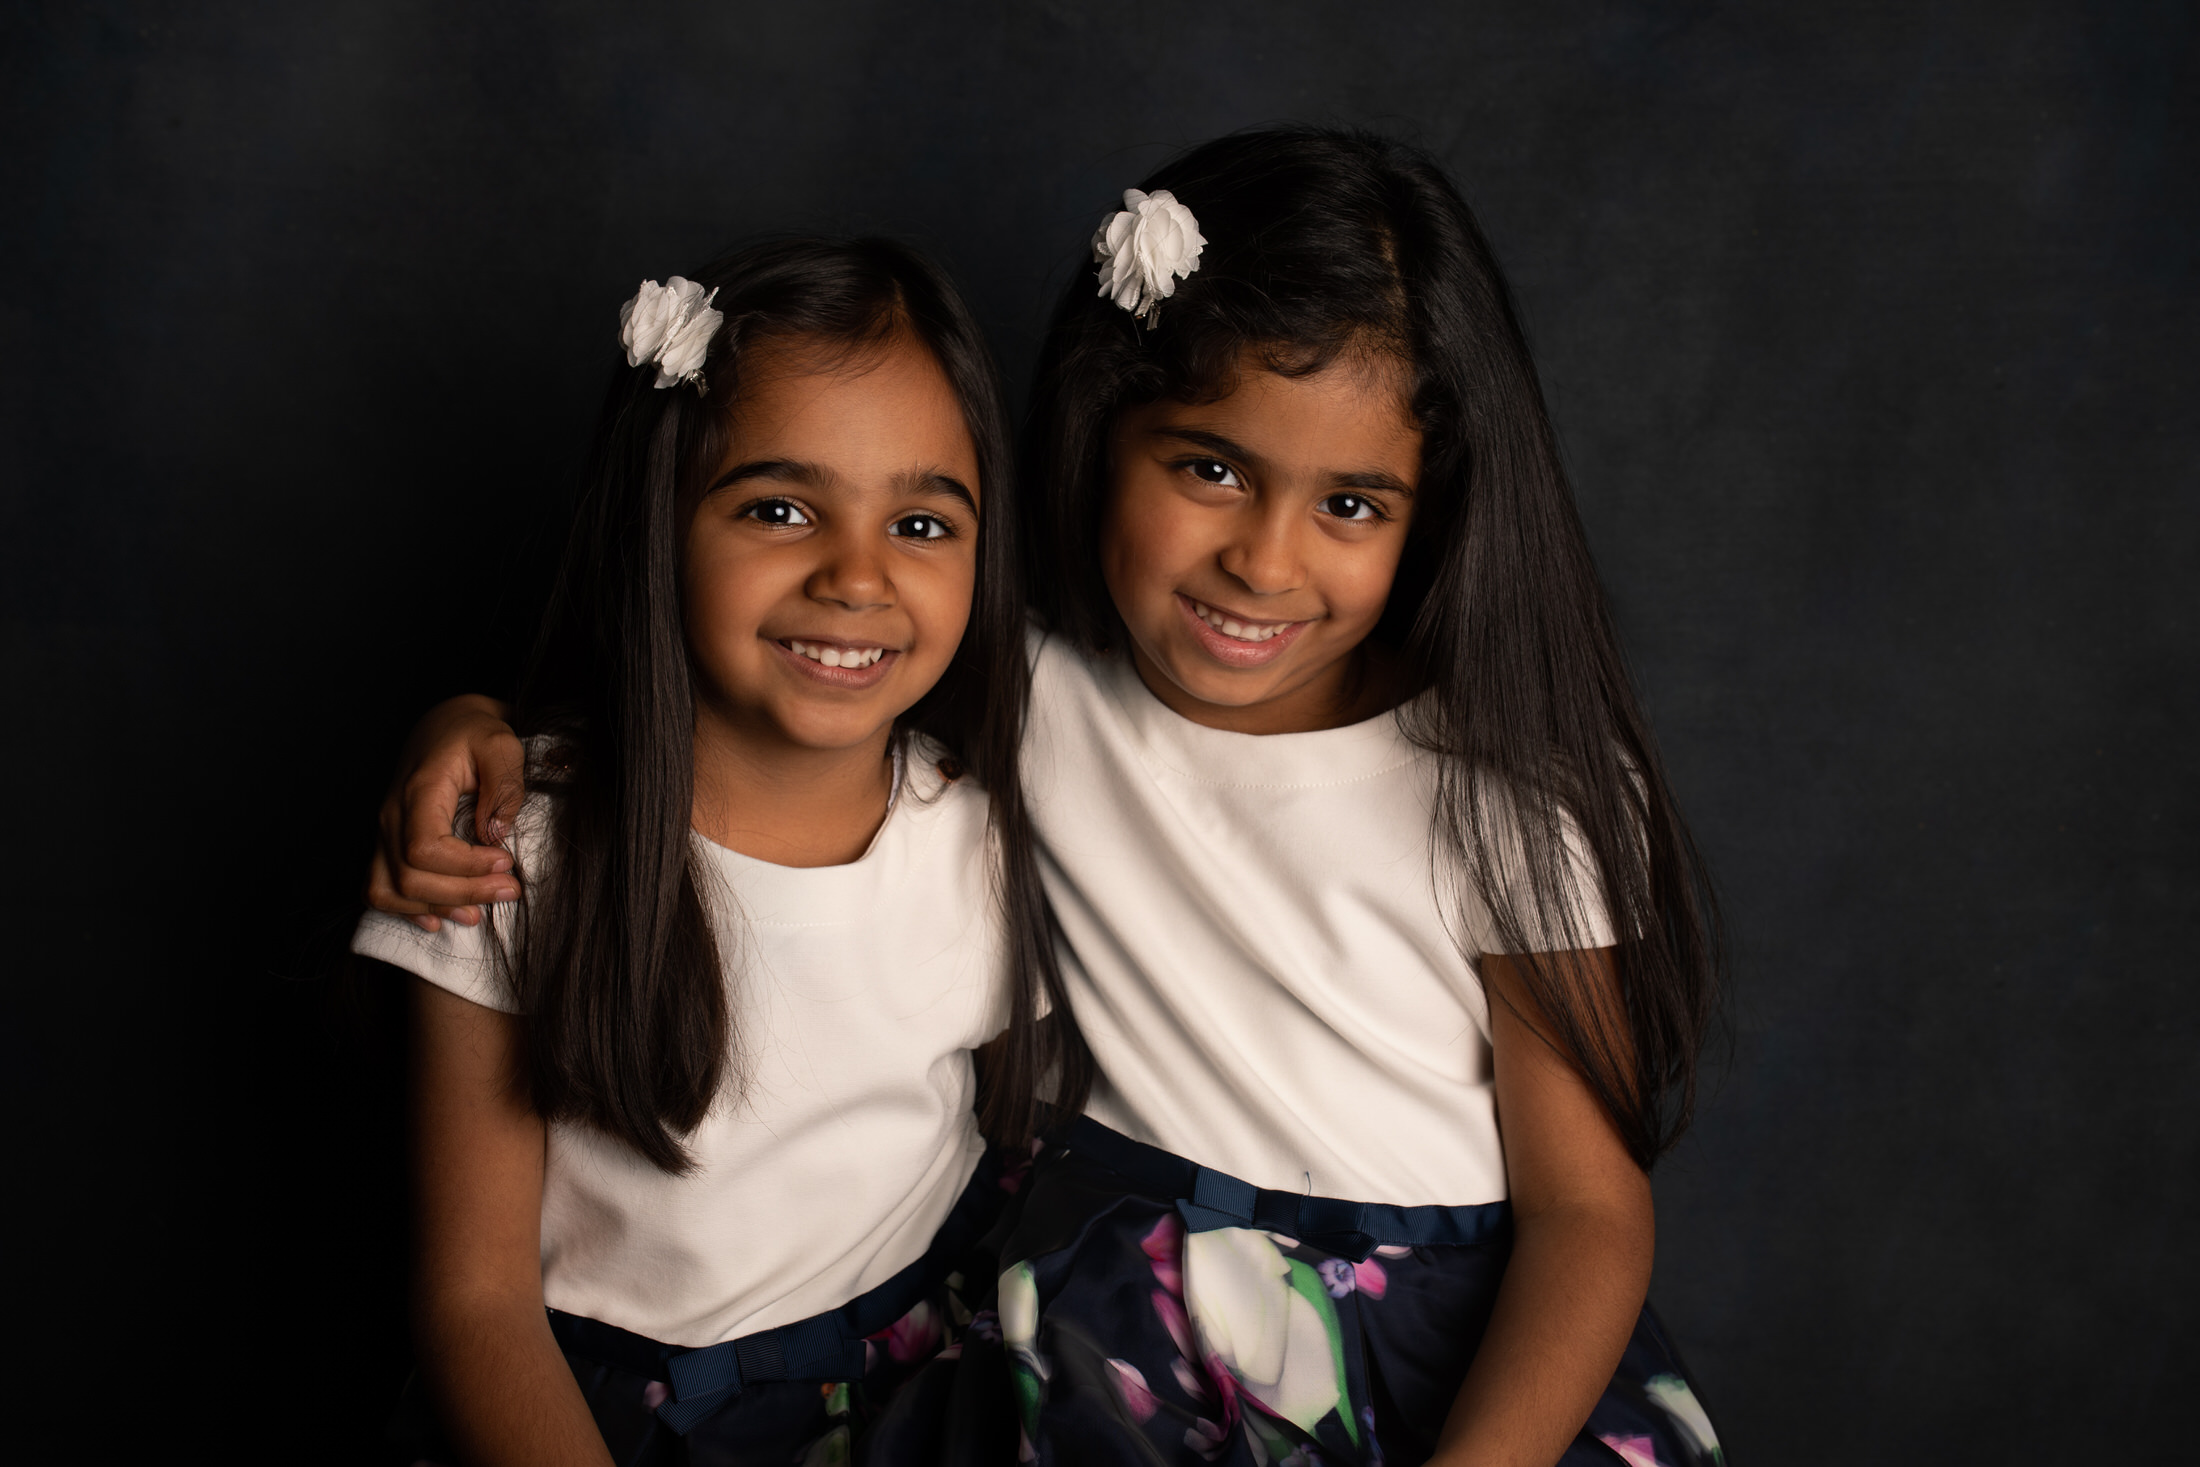 Children photoshoot - siblings wearing matching dresses cuddling on dark backdrop